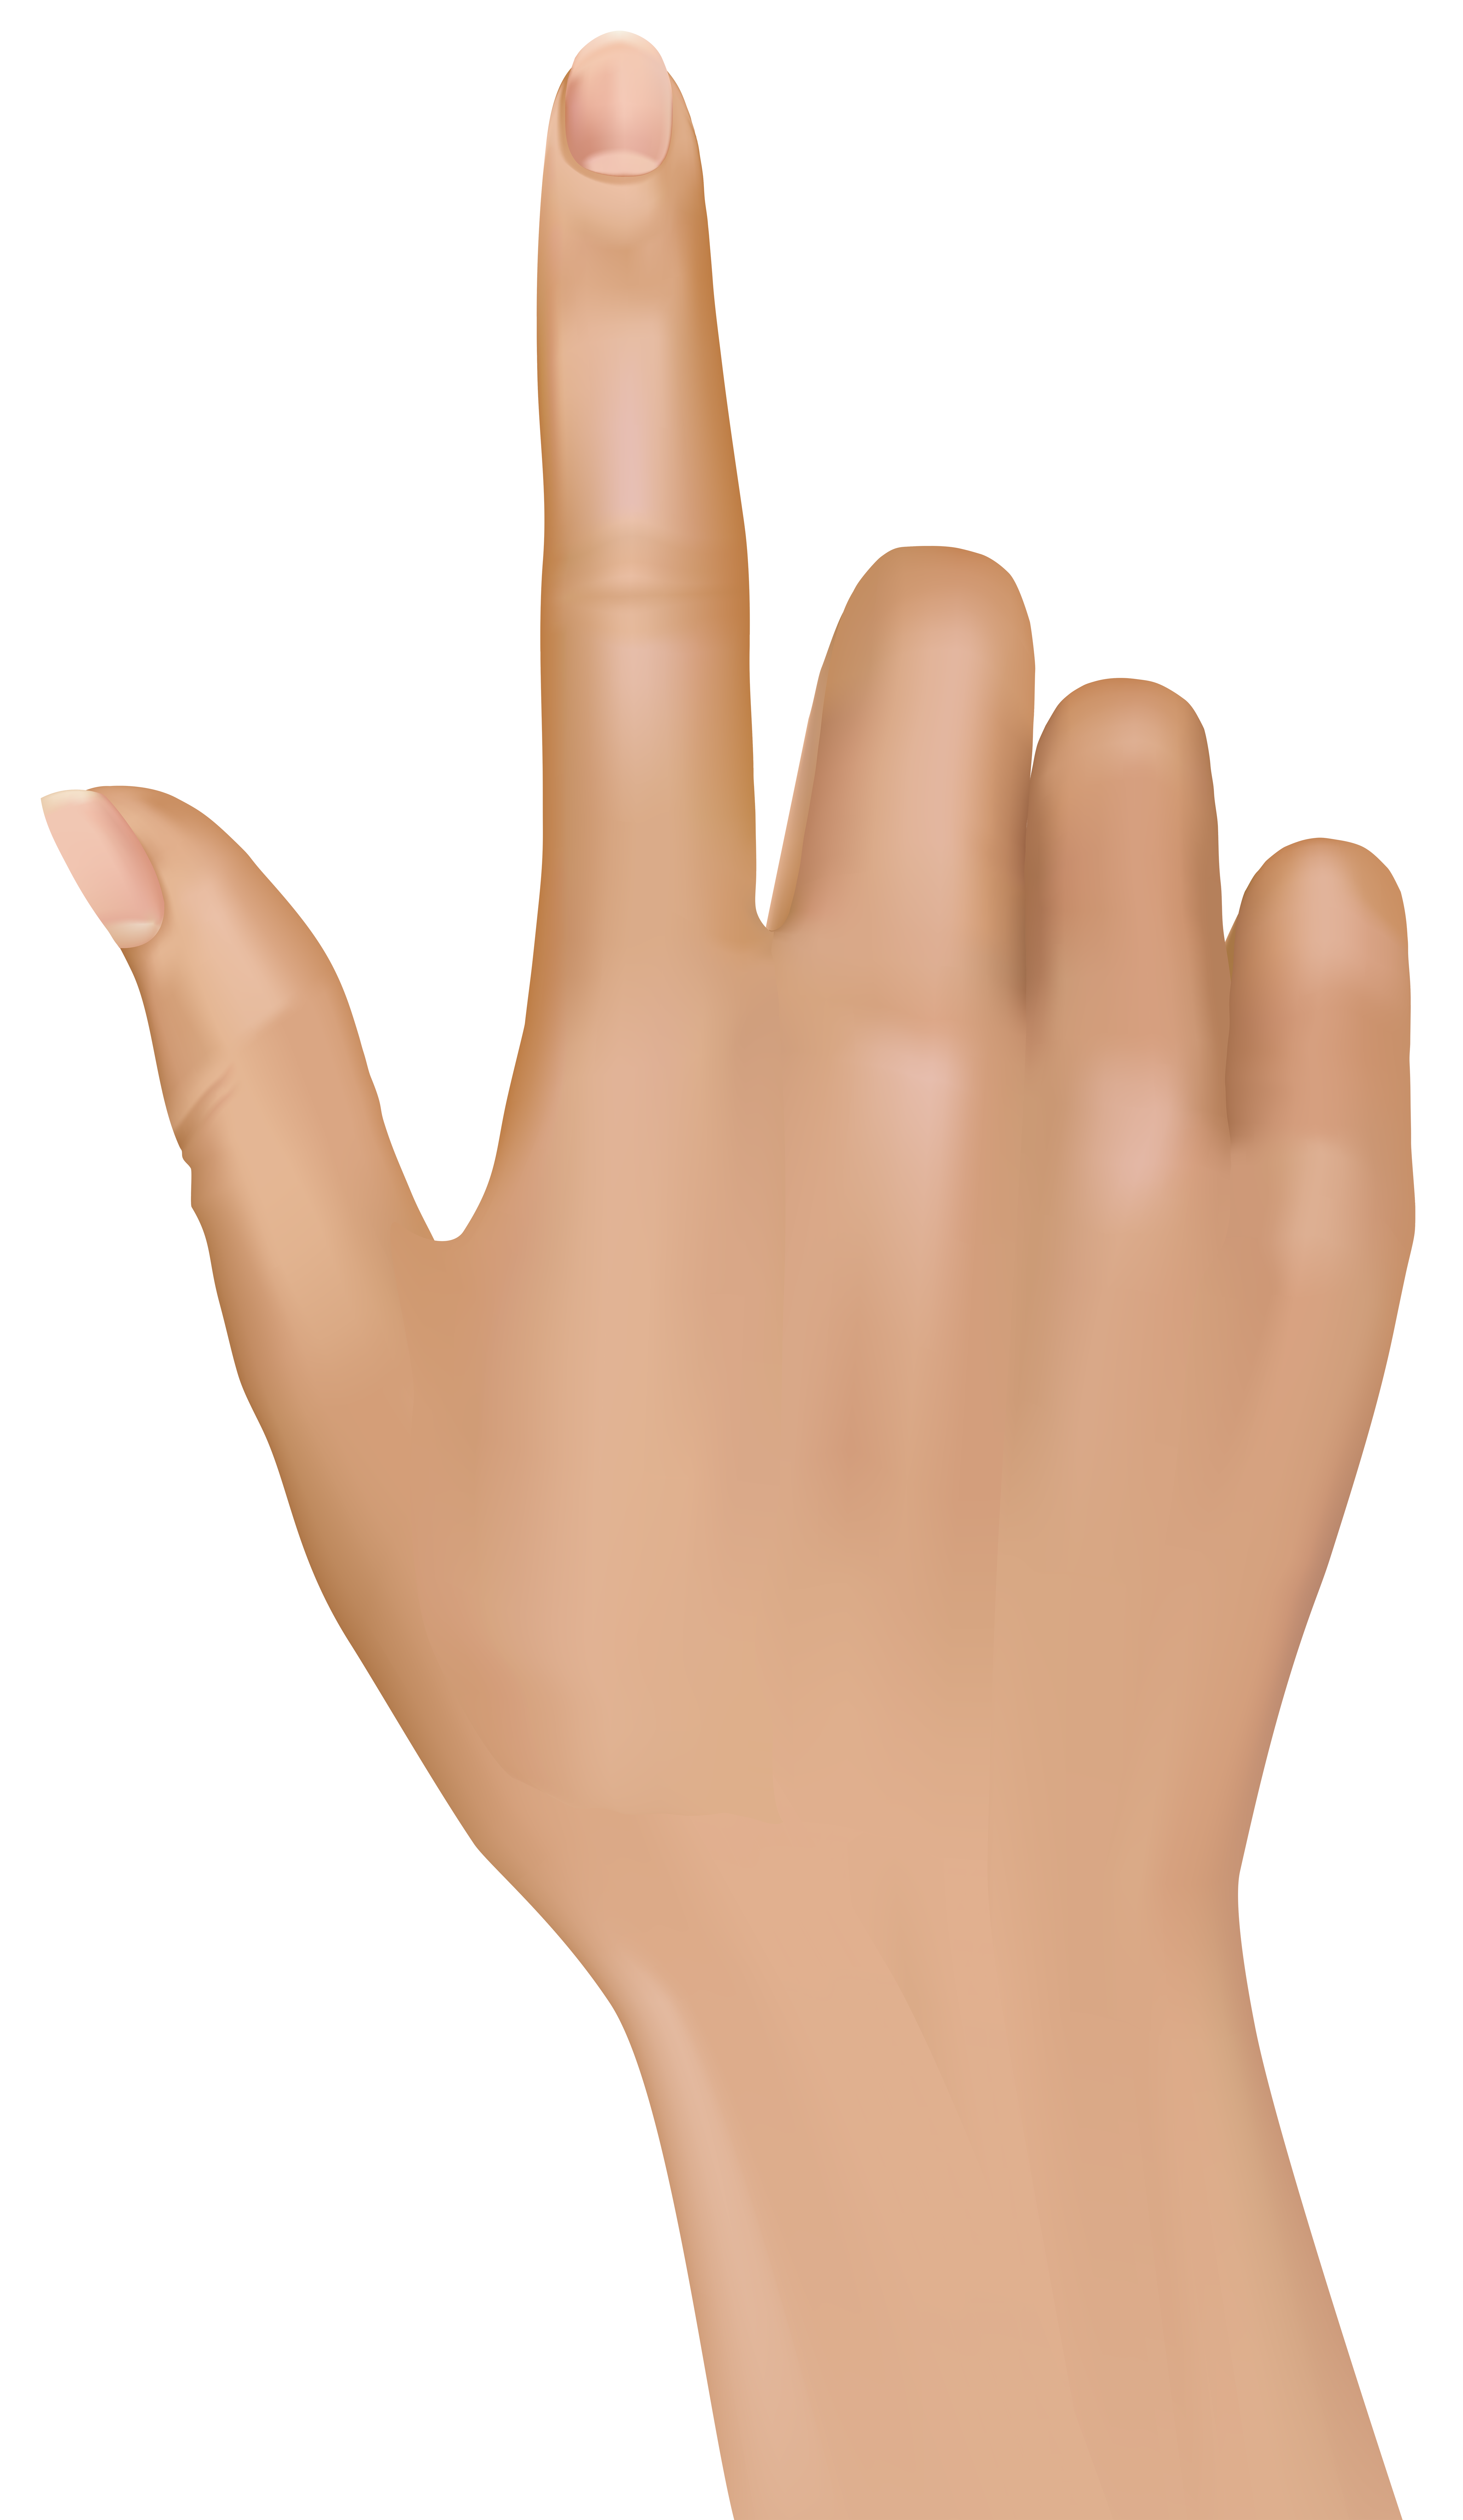 Finger at getdrawings com. Hands clipart arm